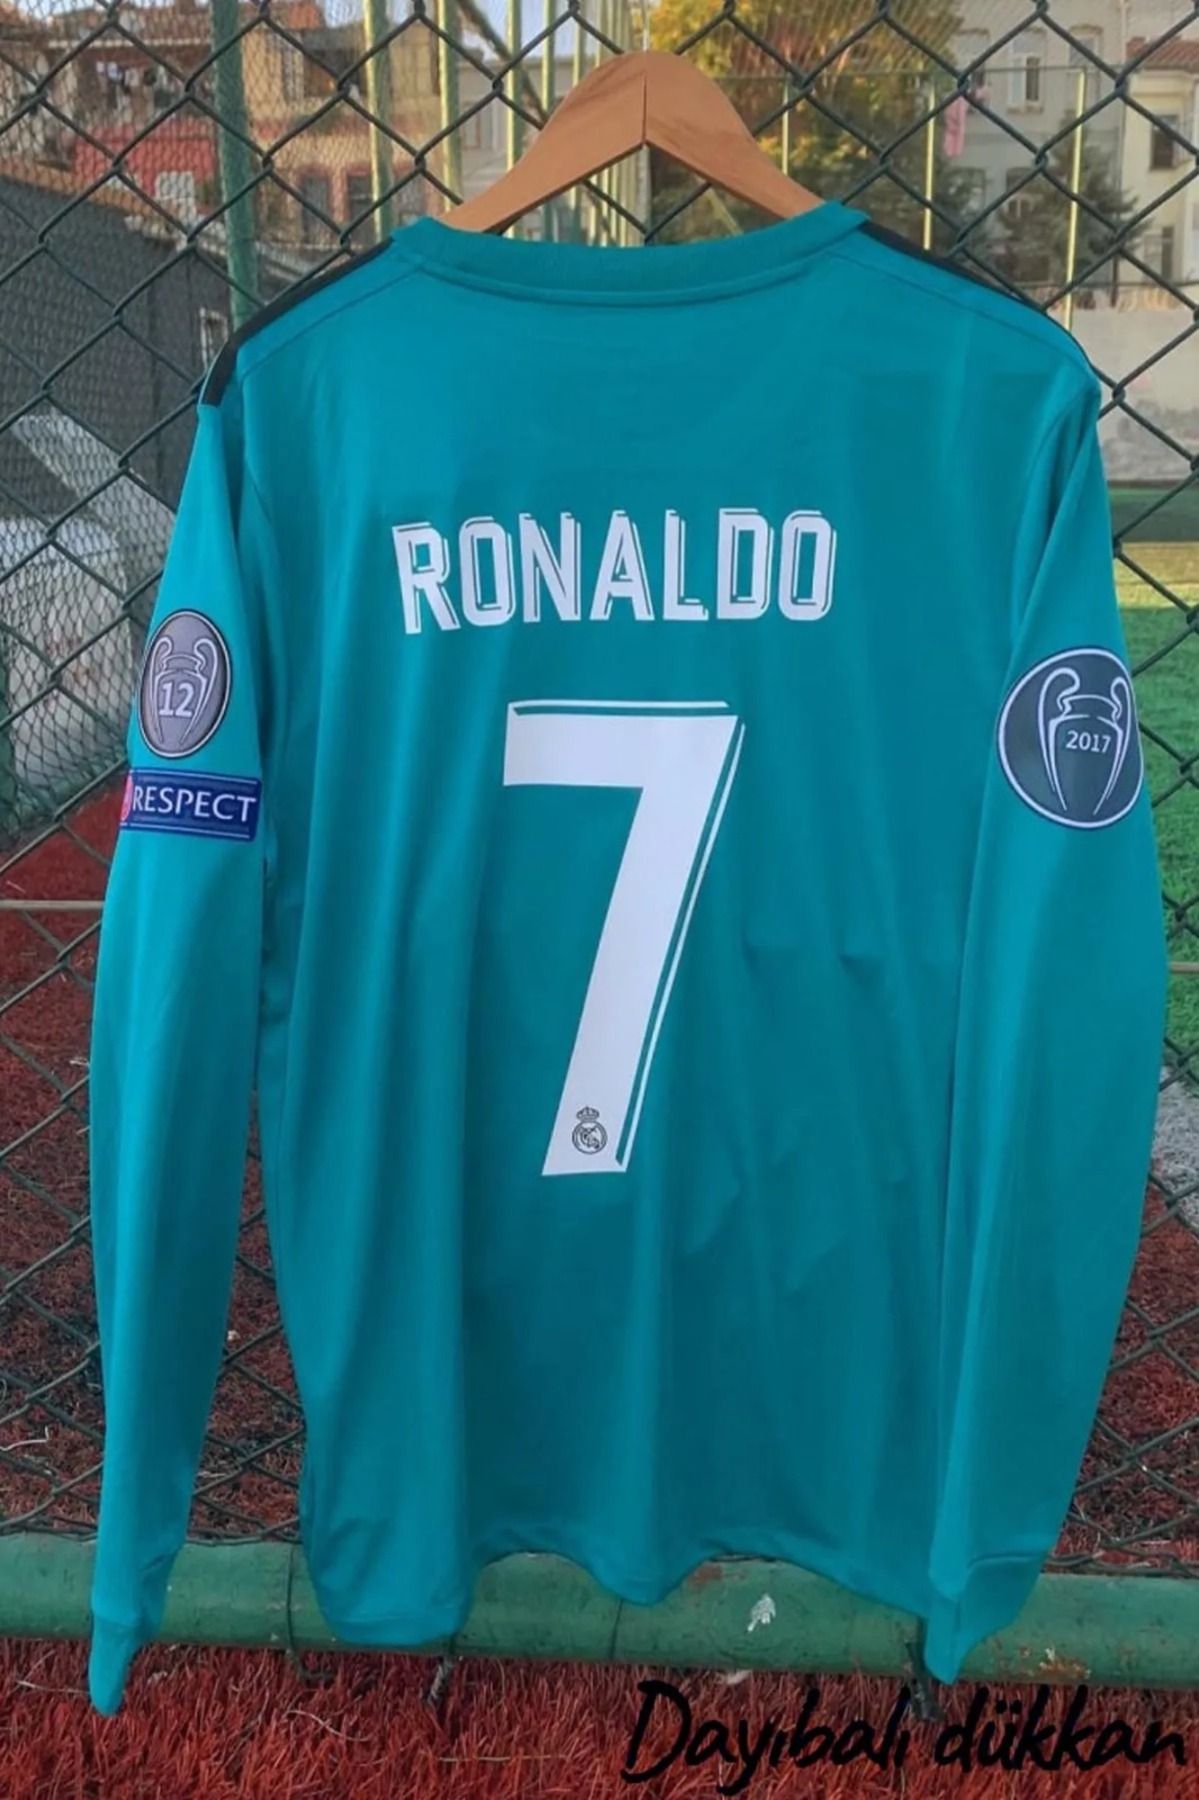 Candy Star Real Madrid Cristiano Ronaldo 2017/18 Yeşil-turkuaz Şampiyonlar Ligi Deplasman Forması